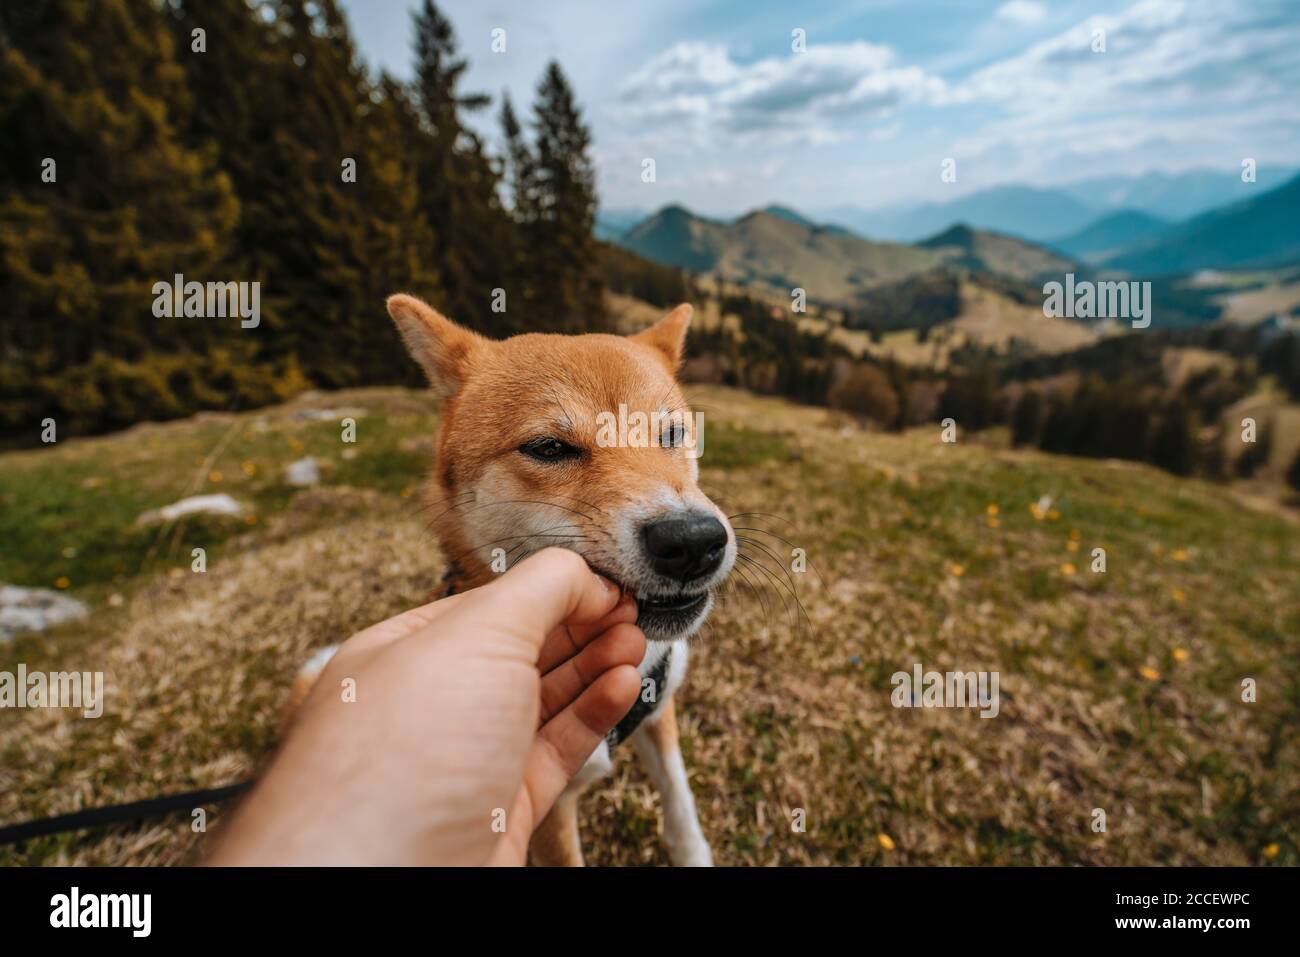 Europe, Germany, Bavaria, Bavarian Alps, Sudelfeld, Tatzelwurm, Brannenburg, Bayrischzell, shiba inu dog eating from human hand, Stock Photo